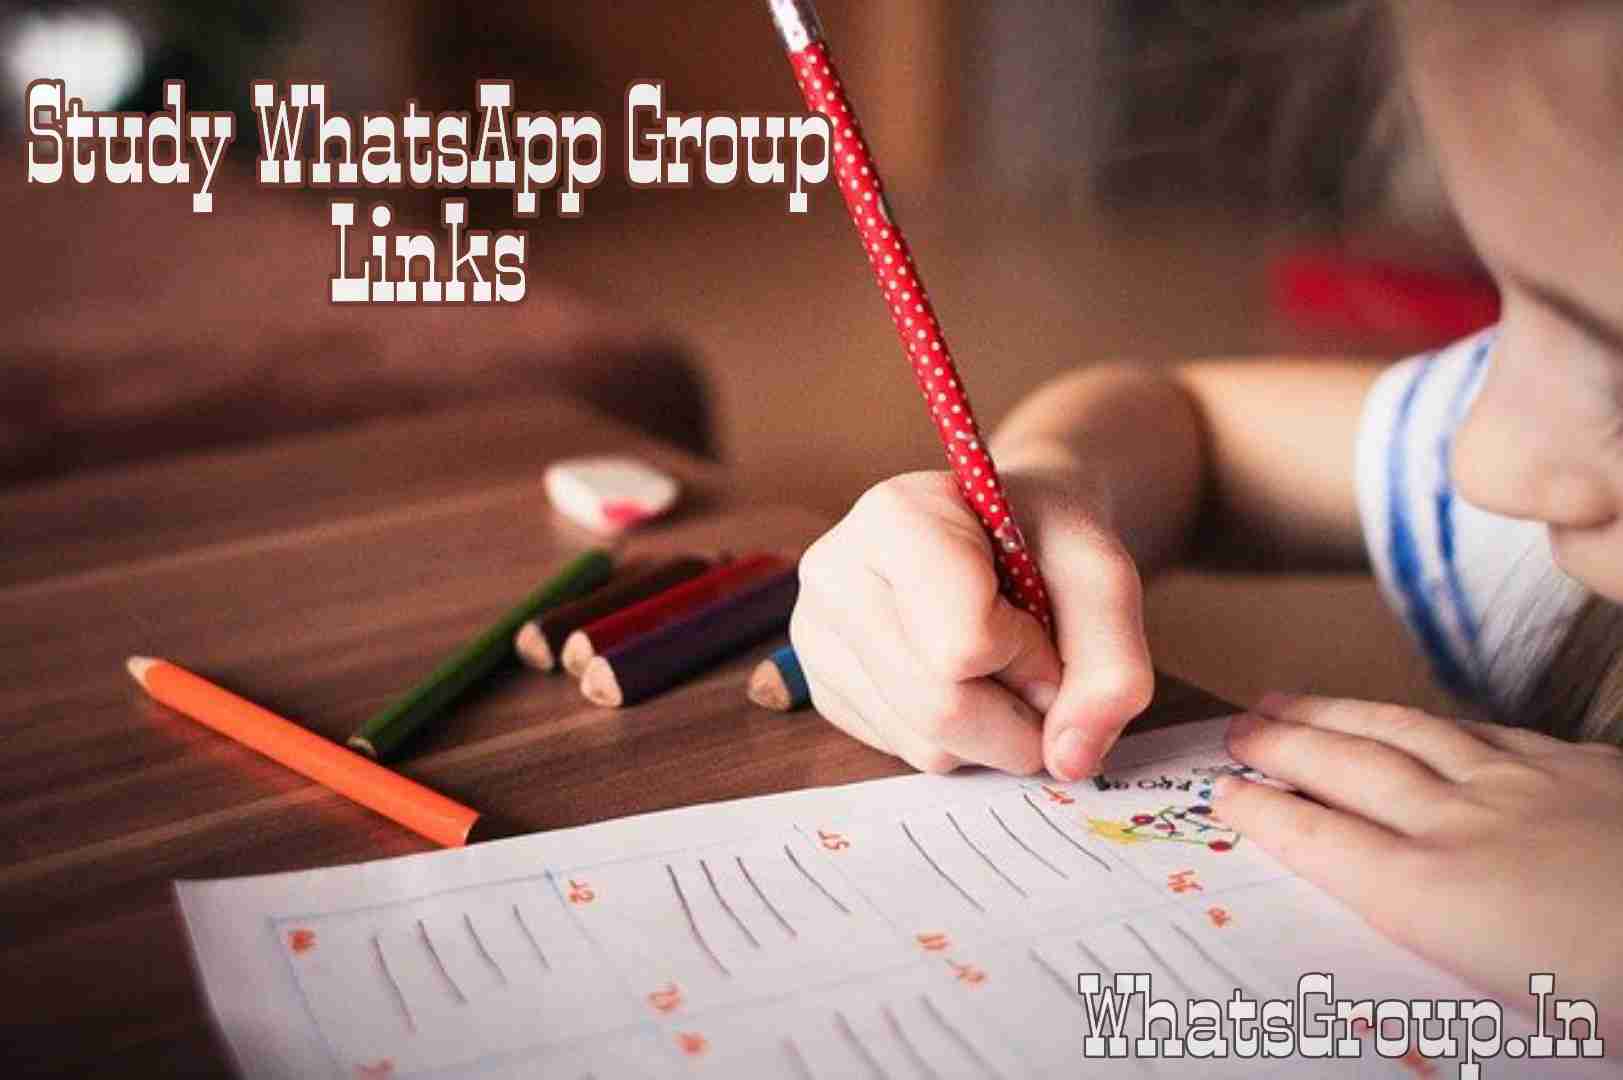 Study WhatsApp Group Links